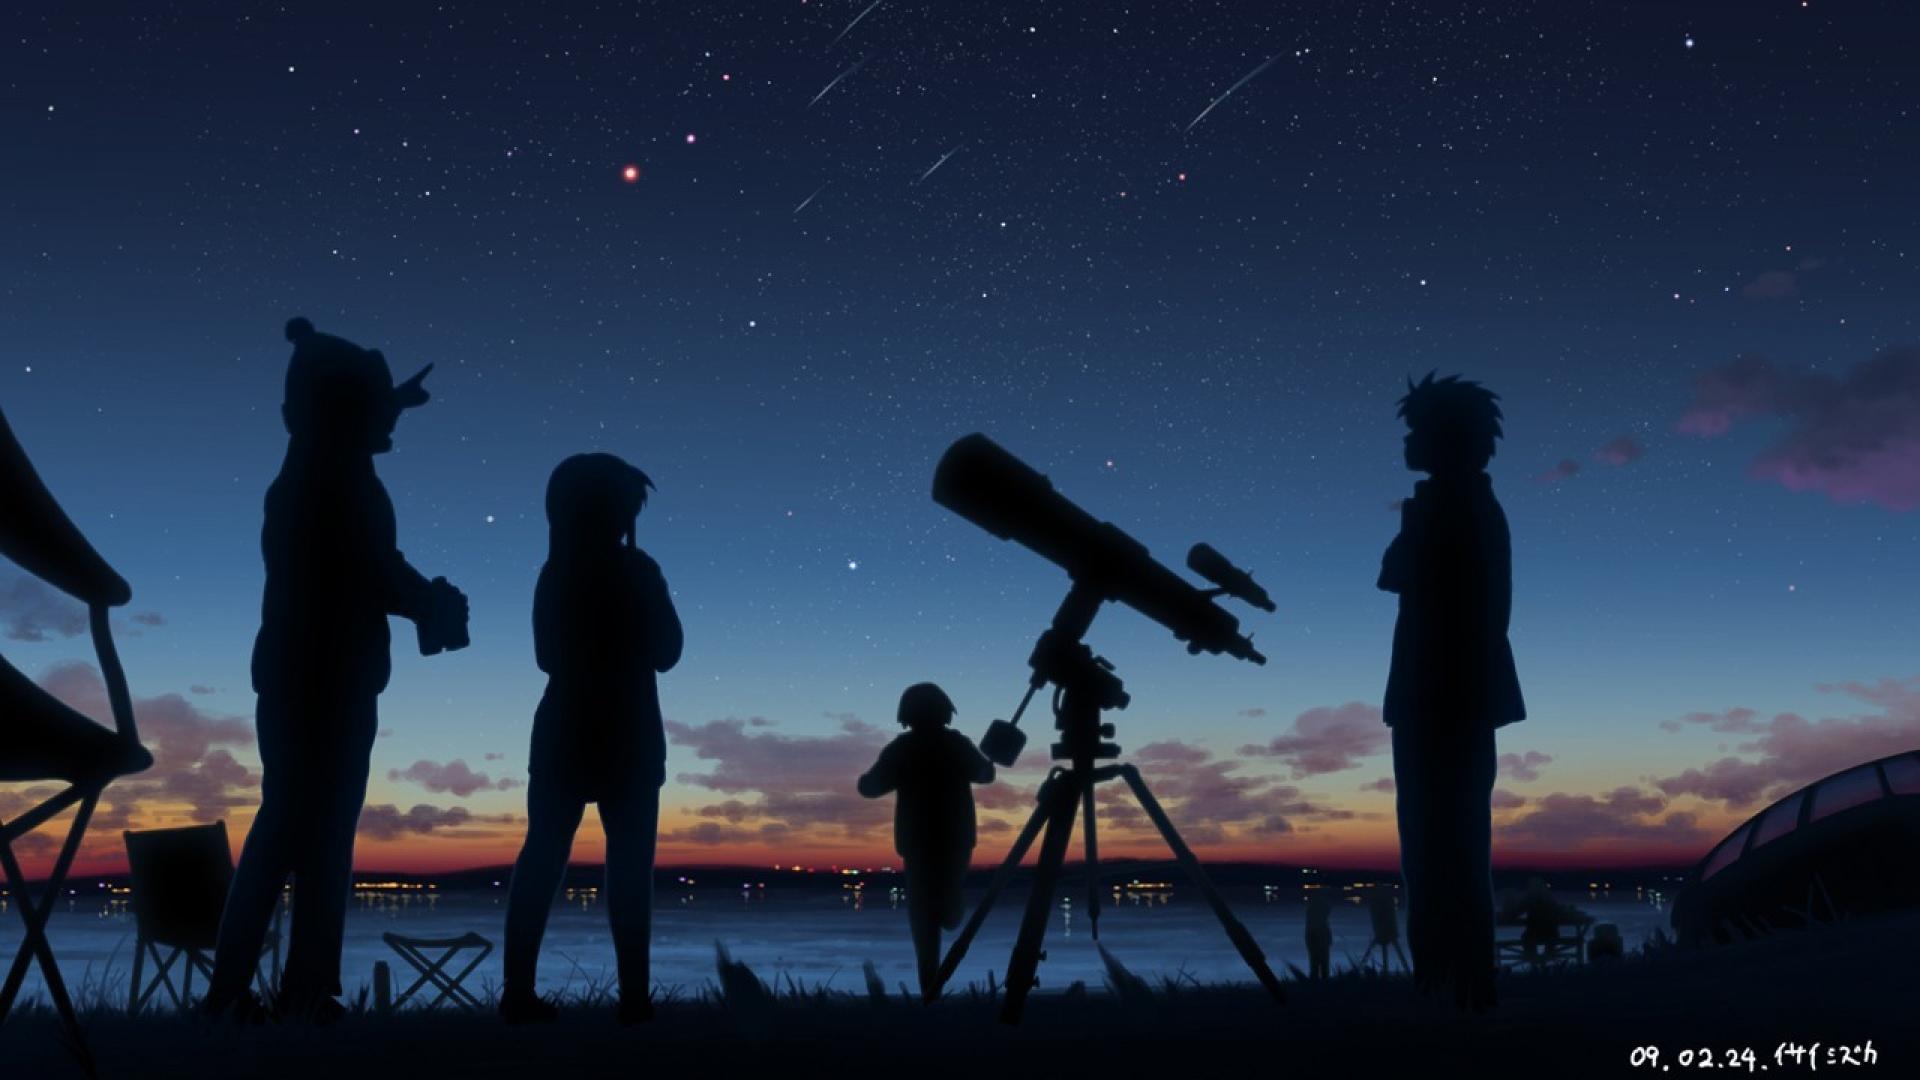 Telescope Silhouett HD Wallpaper Background Image